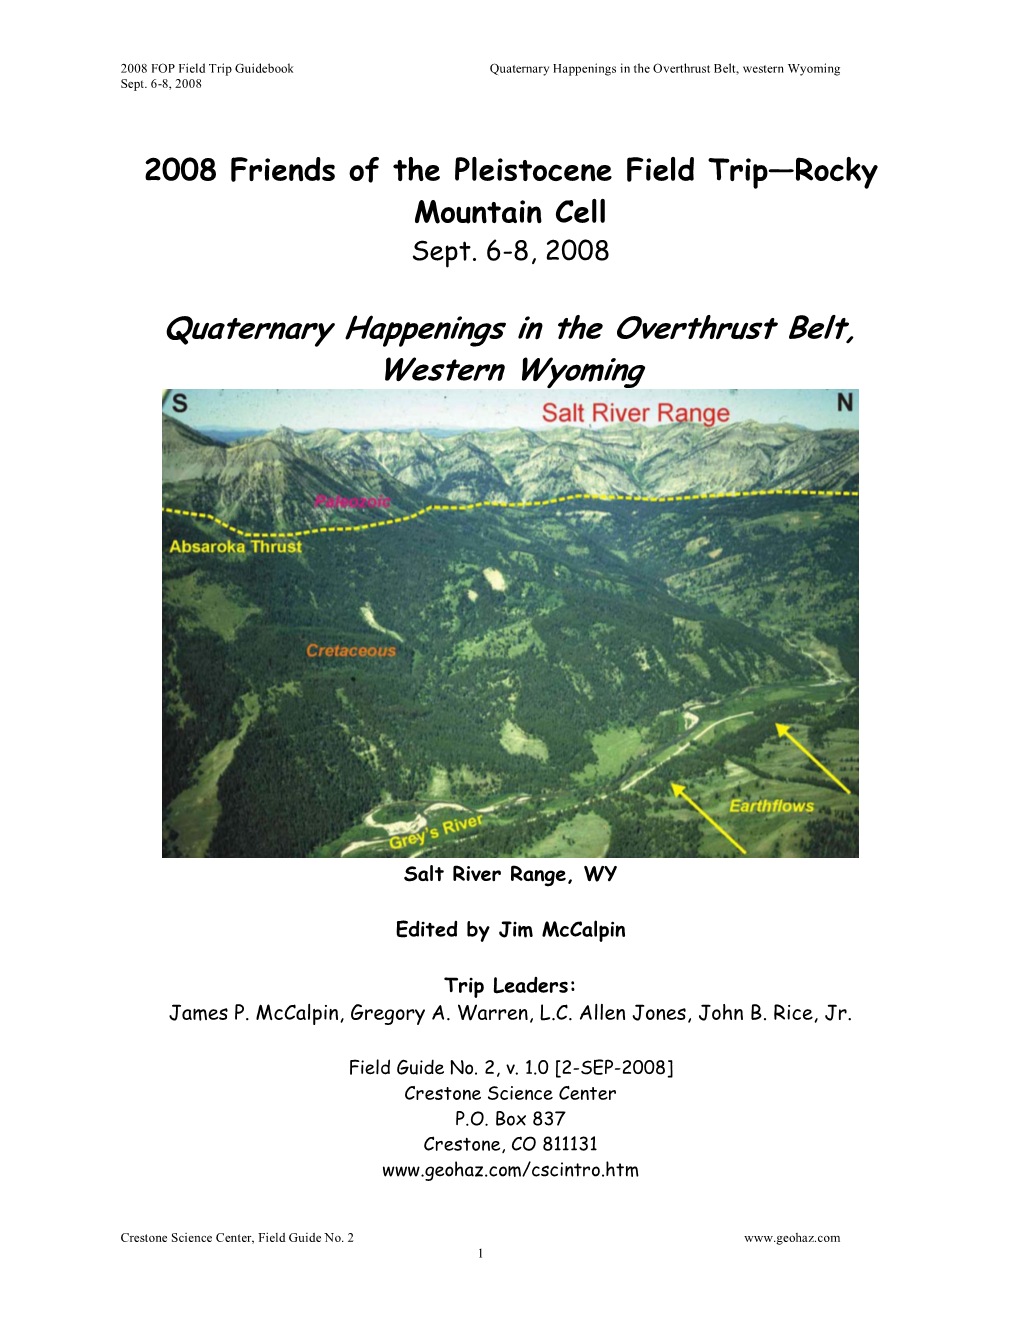 Quaternary Happenings in the Overthrust Belt, Western Wyoming Sept